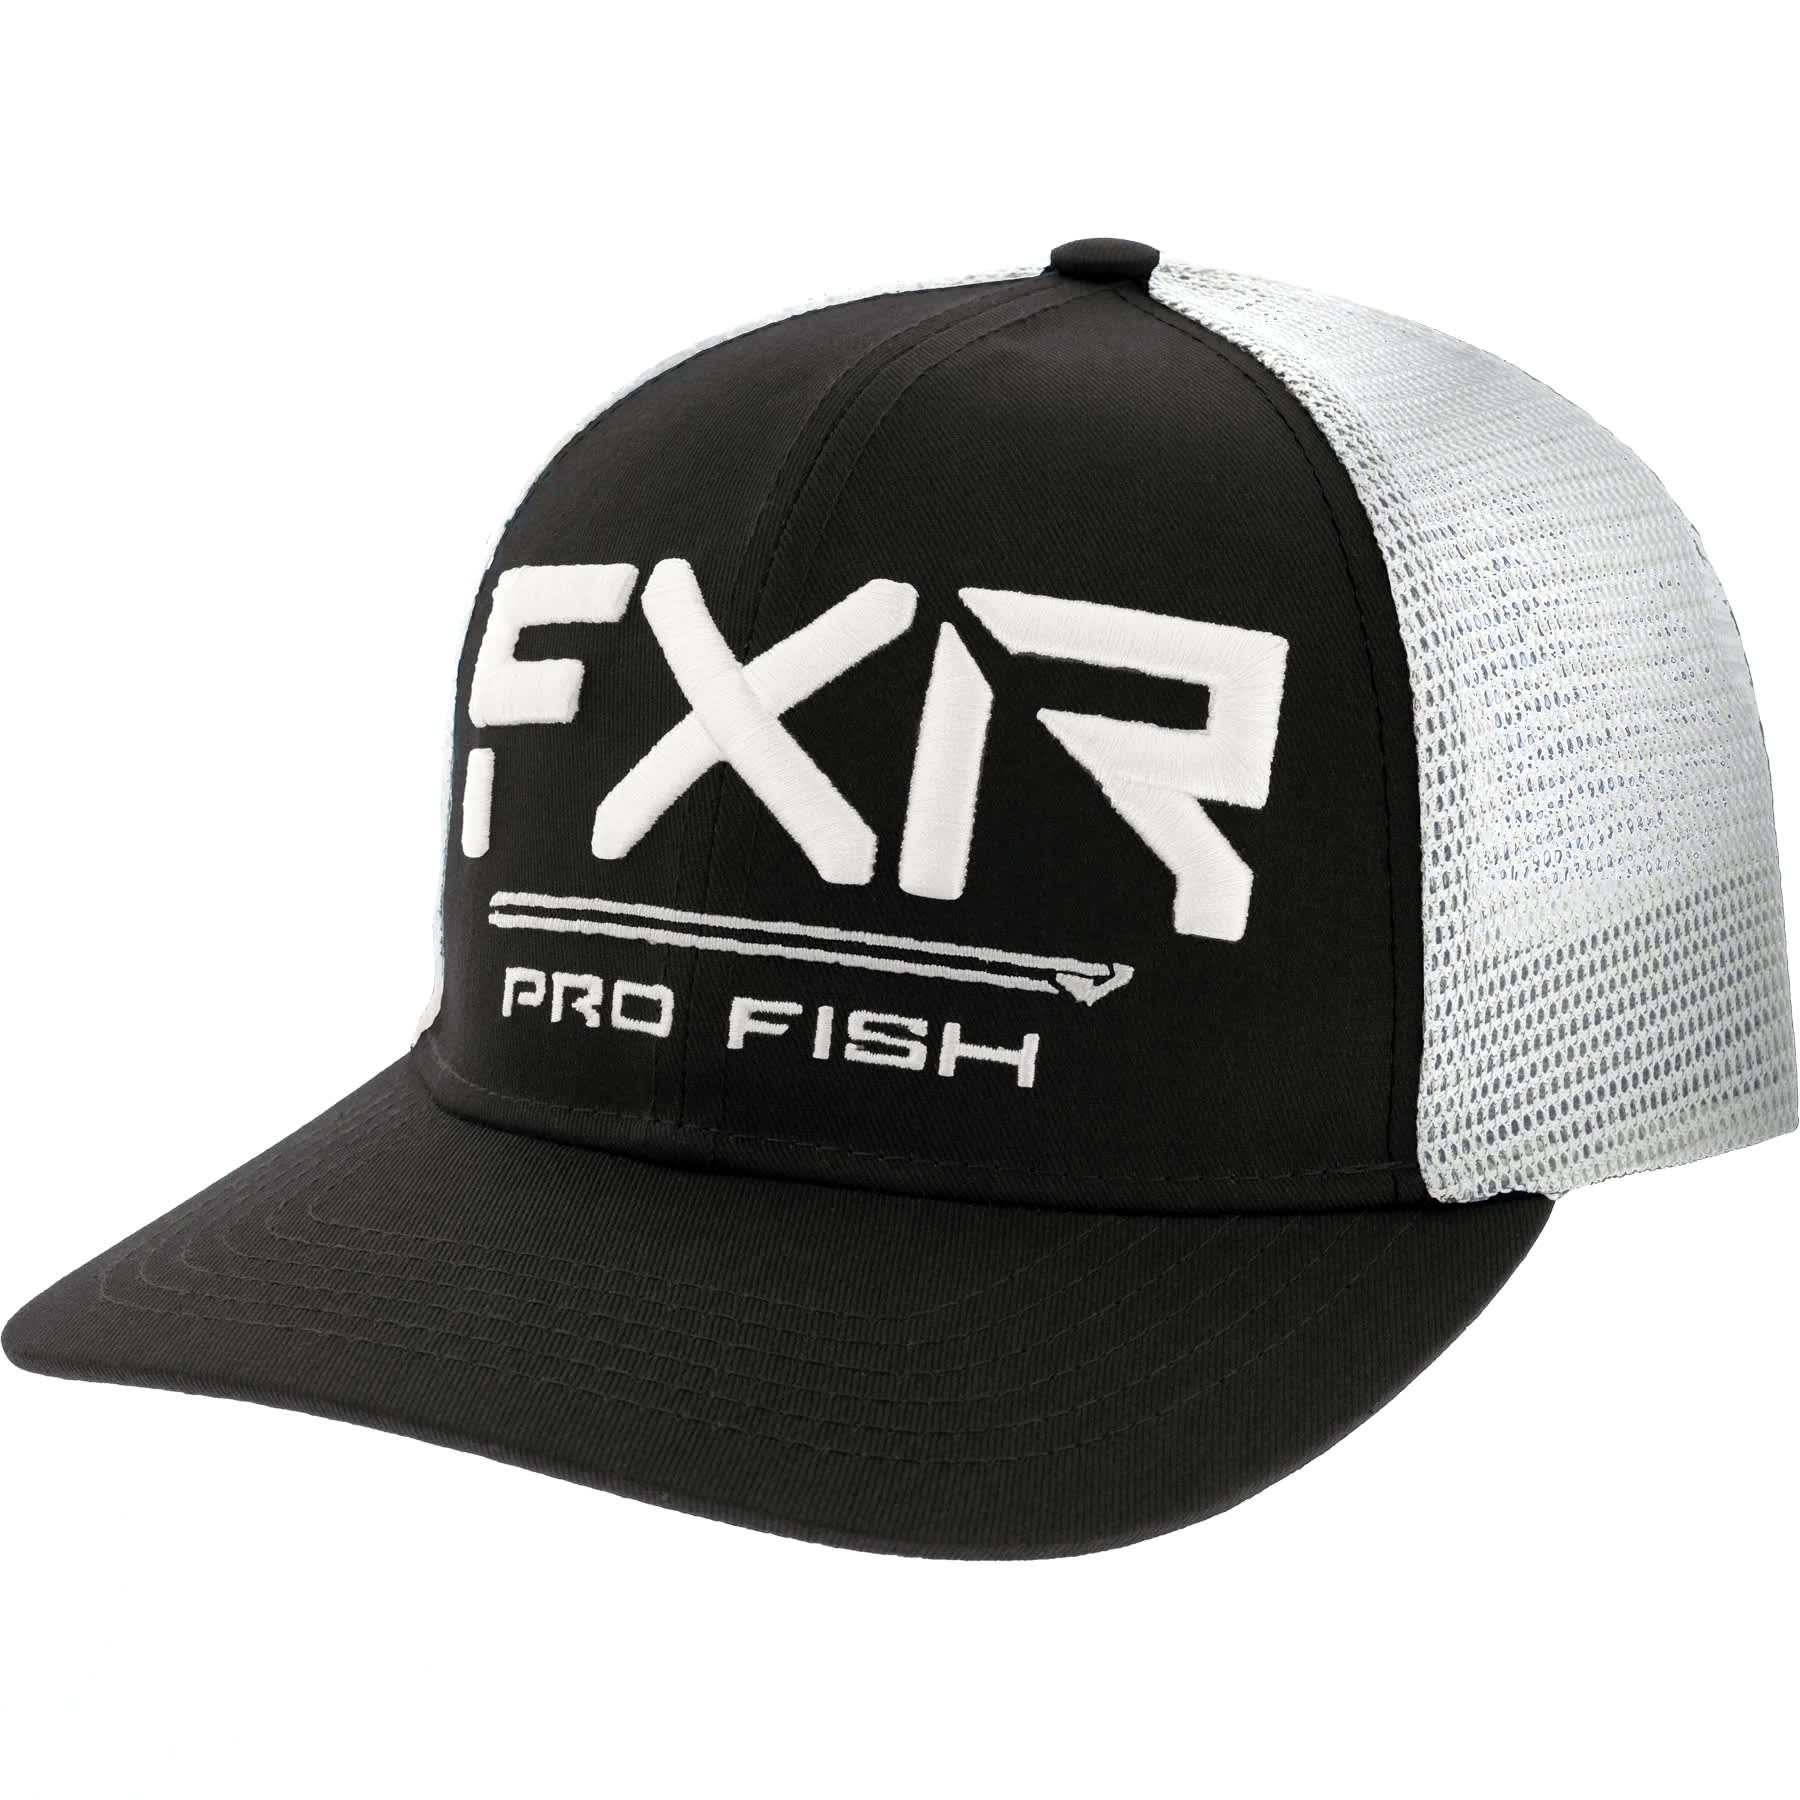 FXR® Men's Pro Fish Hat